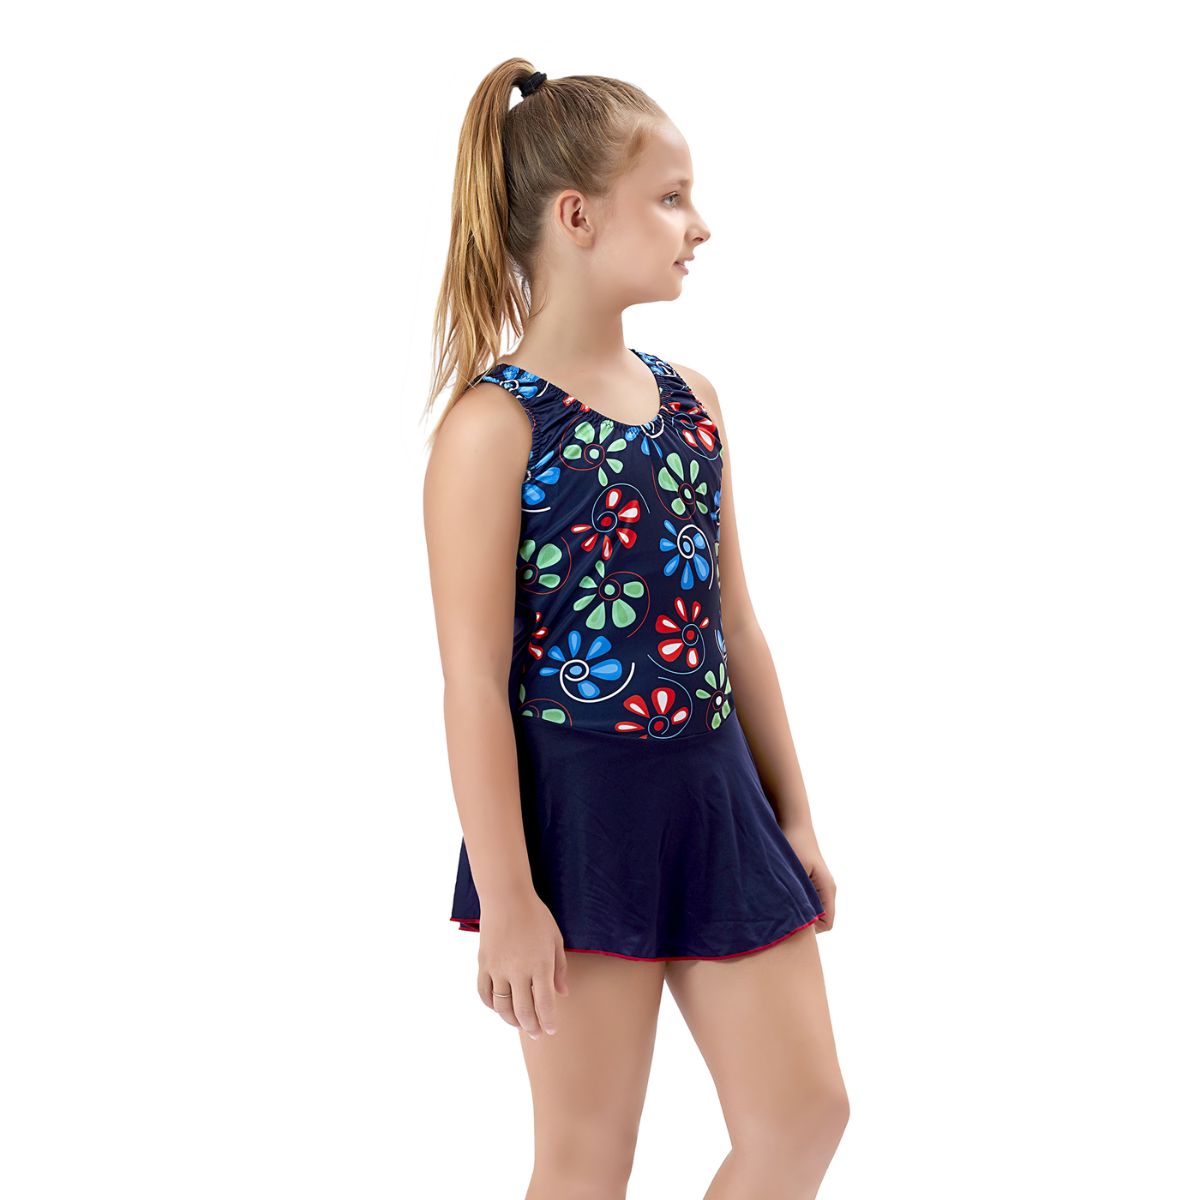 Kids Girl's Swim Wear - Swimming Dress - Retro 4